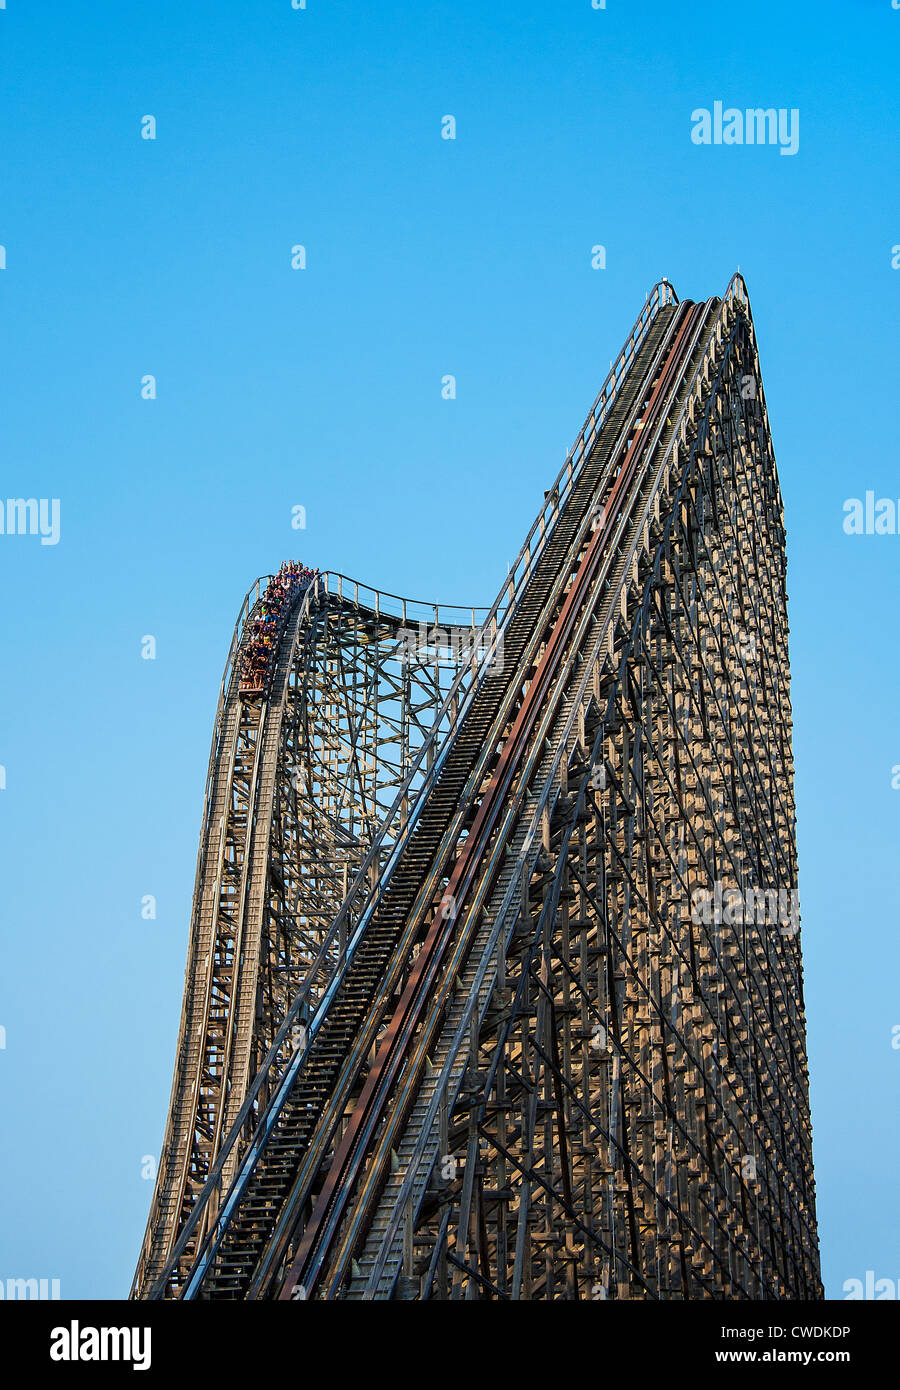 El Toro wooden roller coaster, Great Adventure, Six Flags, New Jersey, USA  Stock Photo - Alamy